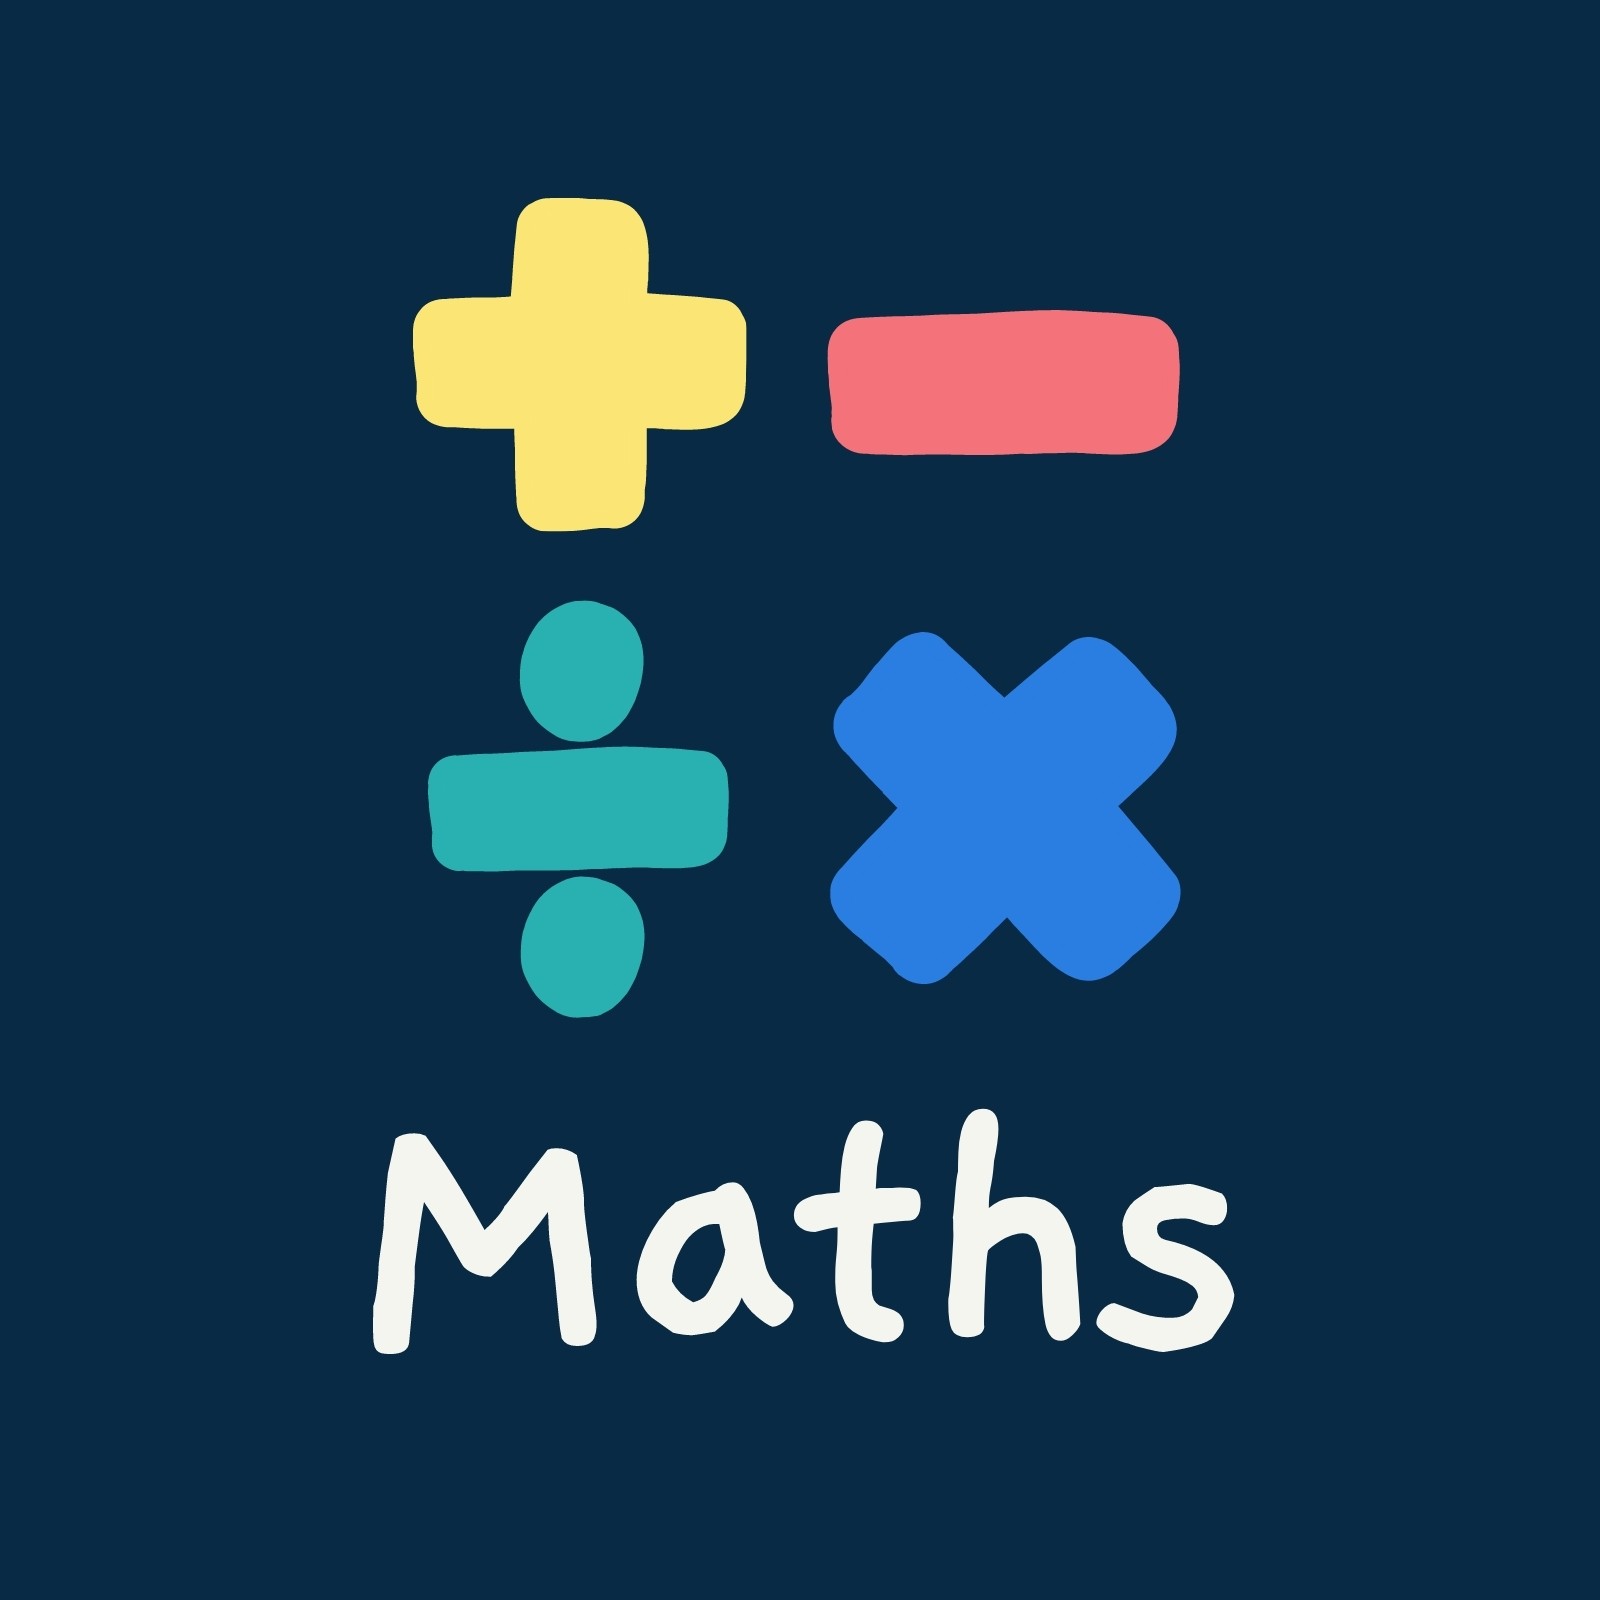 Free and customizable math templates